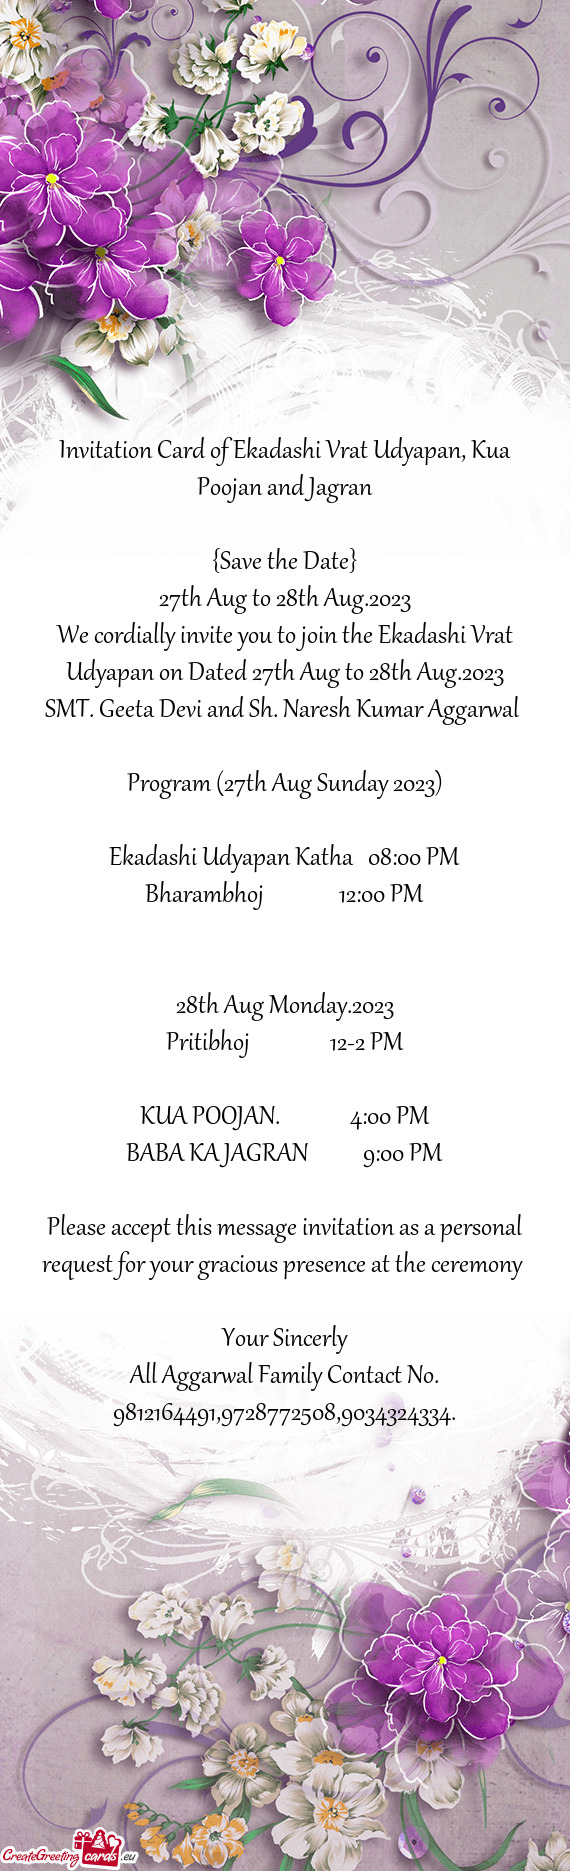 We cordially invite you to join the Ekadashi Vrat Udyapan on Dated 27th Aug to 28th Aug.2023